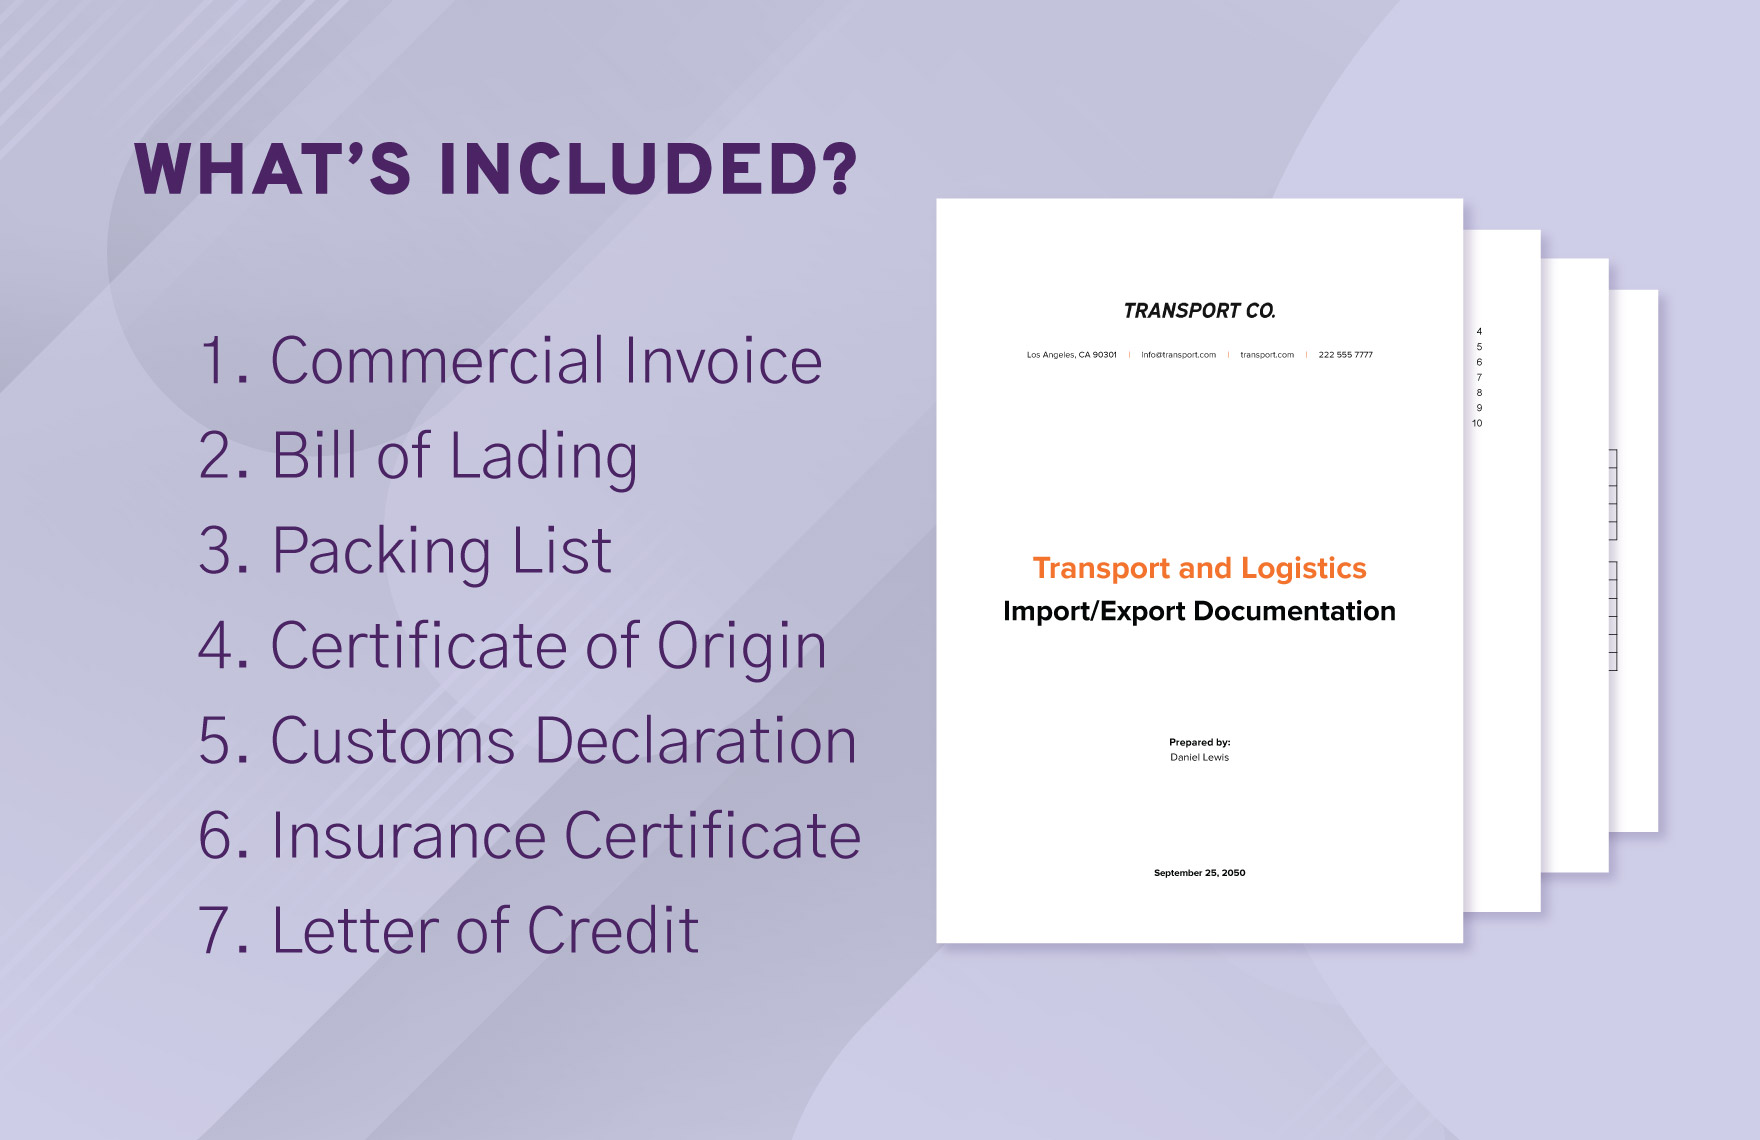 Transport and Logistics Import/Export Documentation Template